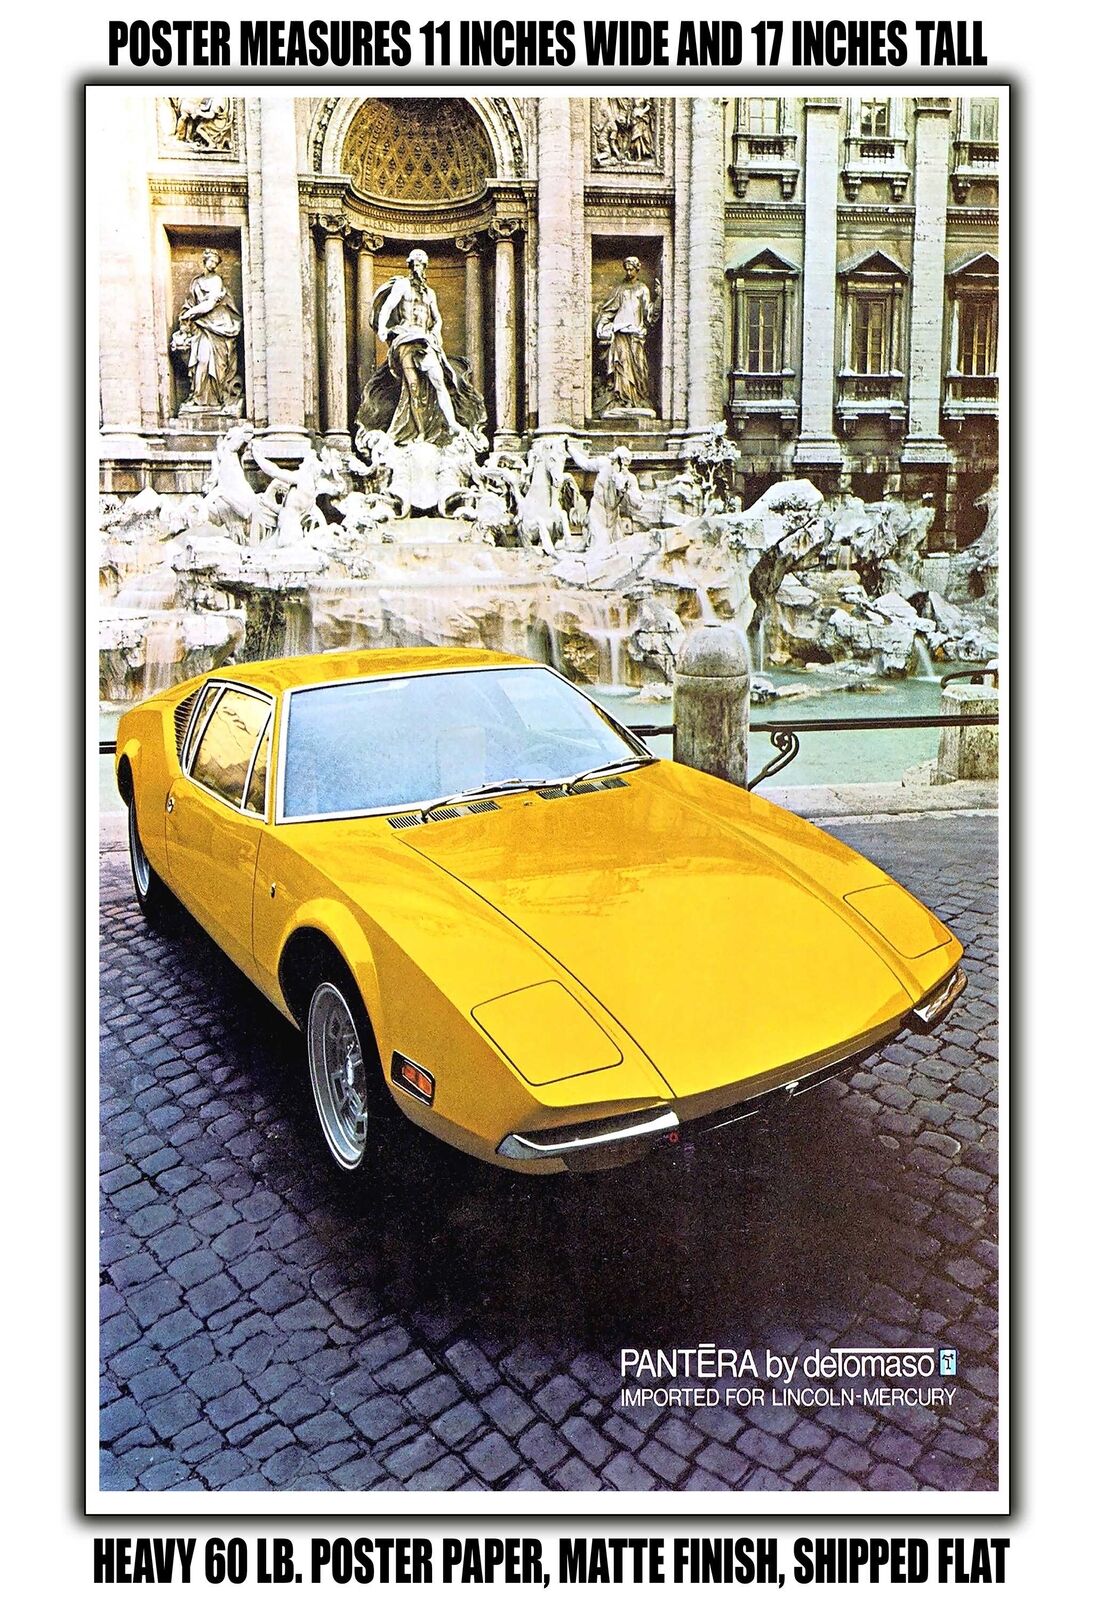 11x17 POSTER - 1971 DeTomaso Pantera by Lincoln Mercury